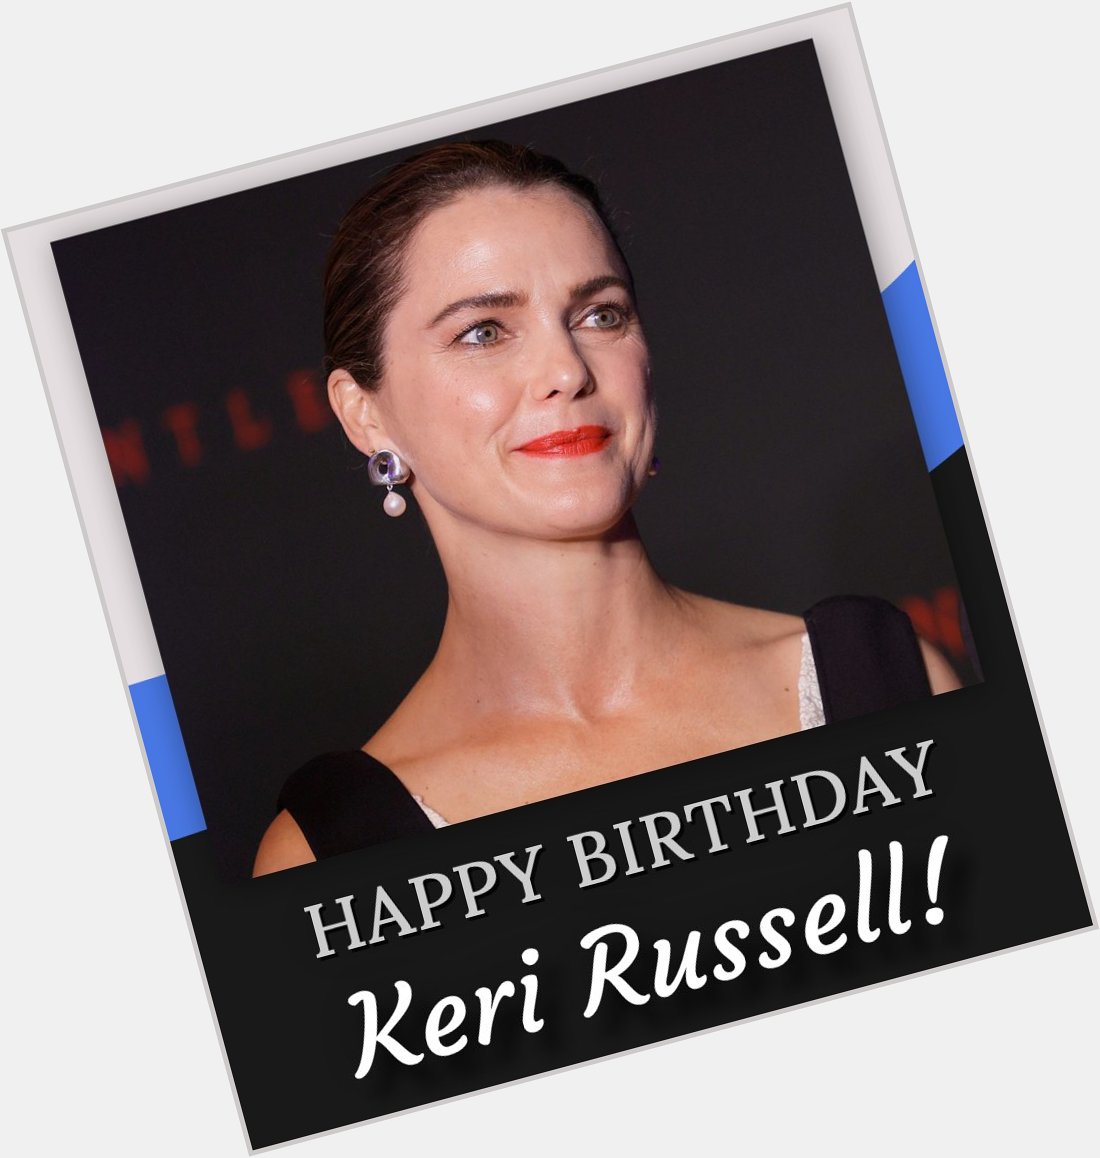 Happy birthday, Keri Russell! 